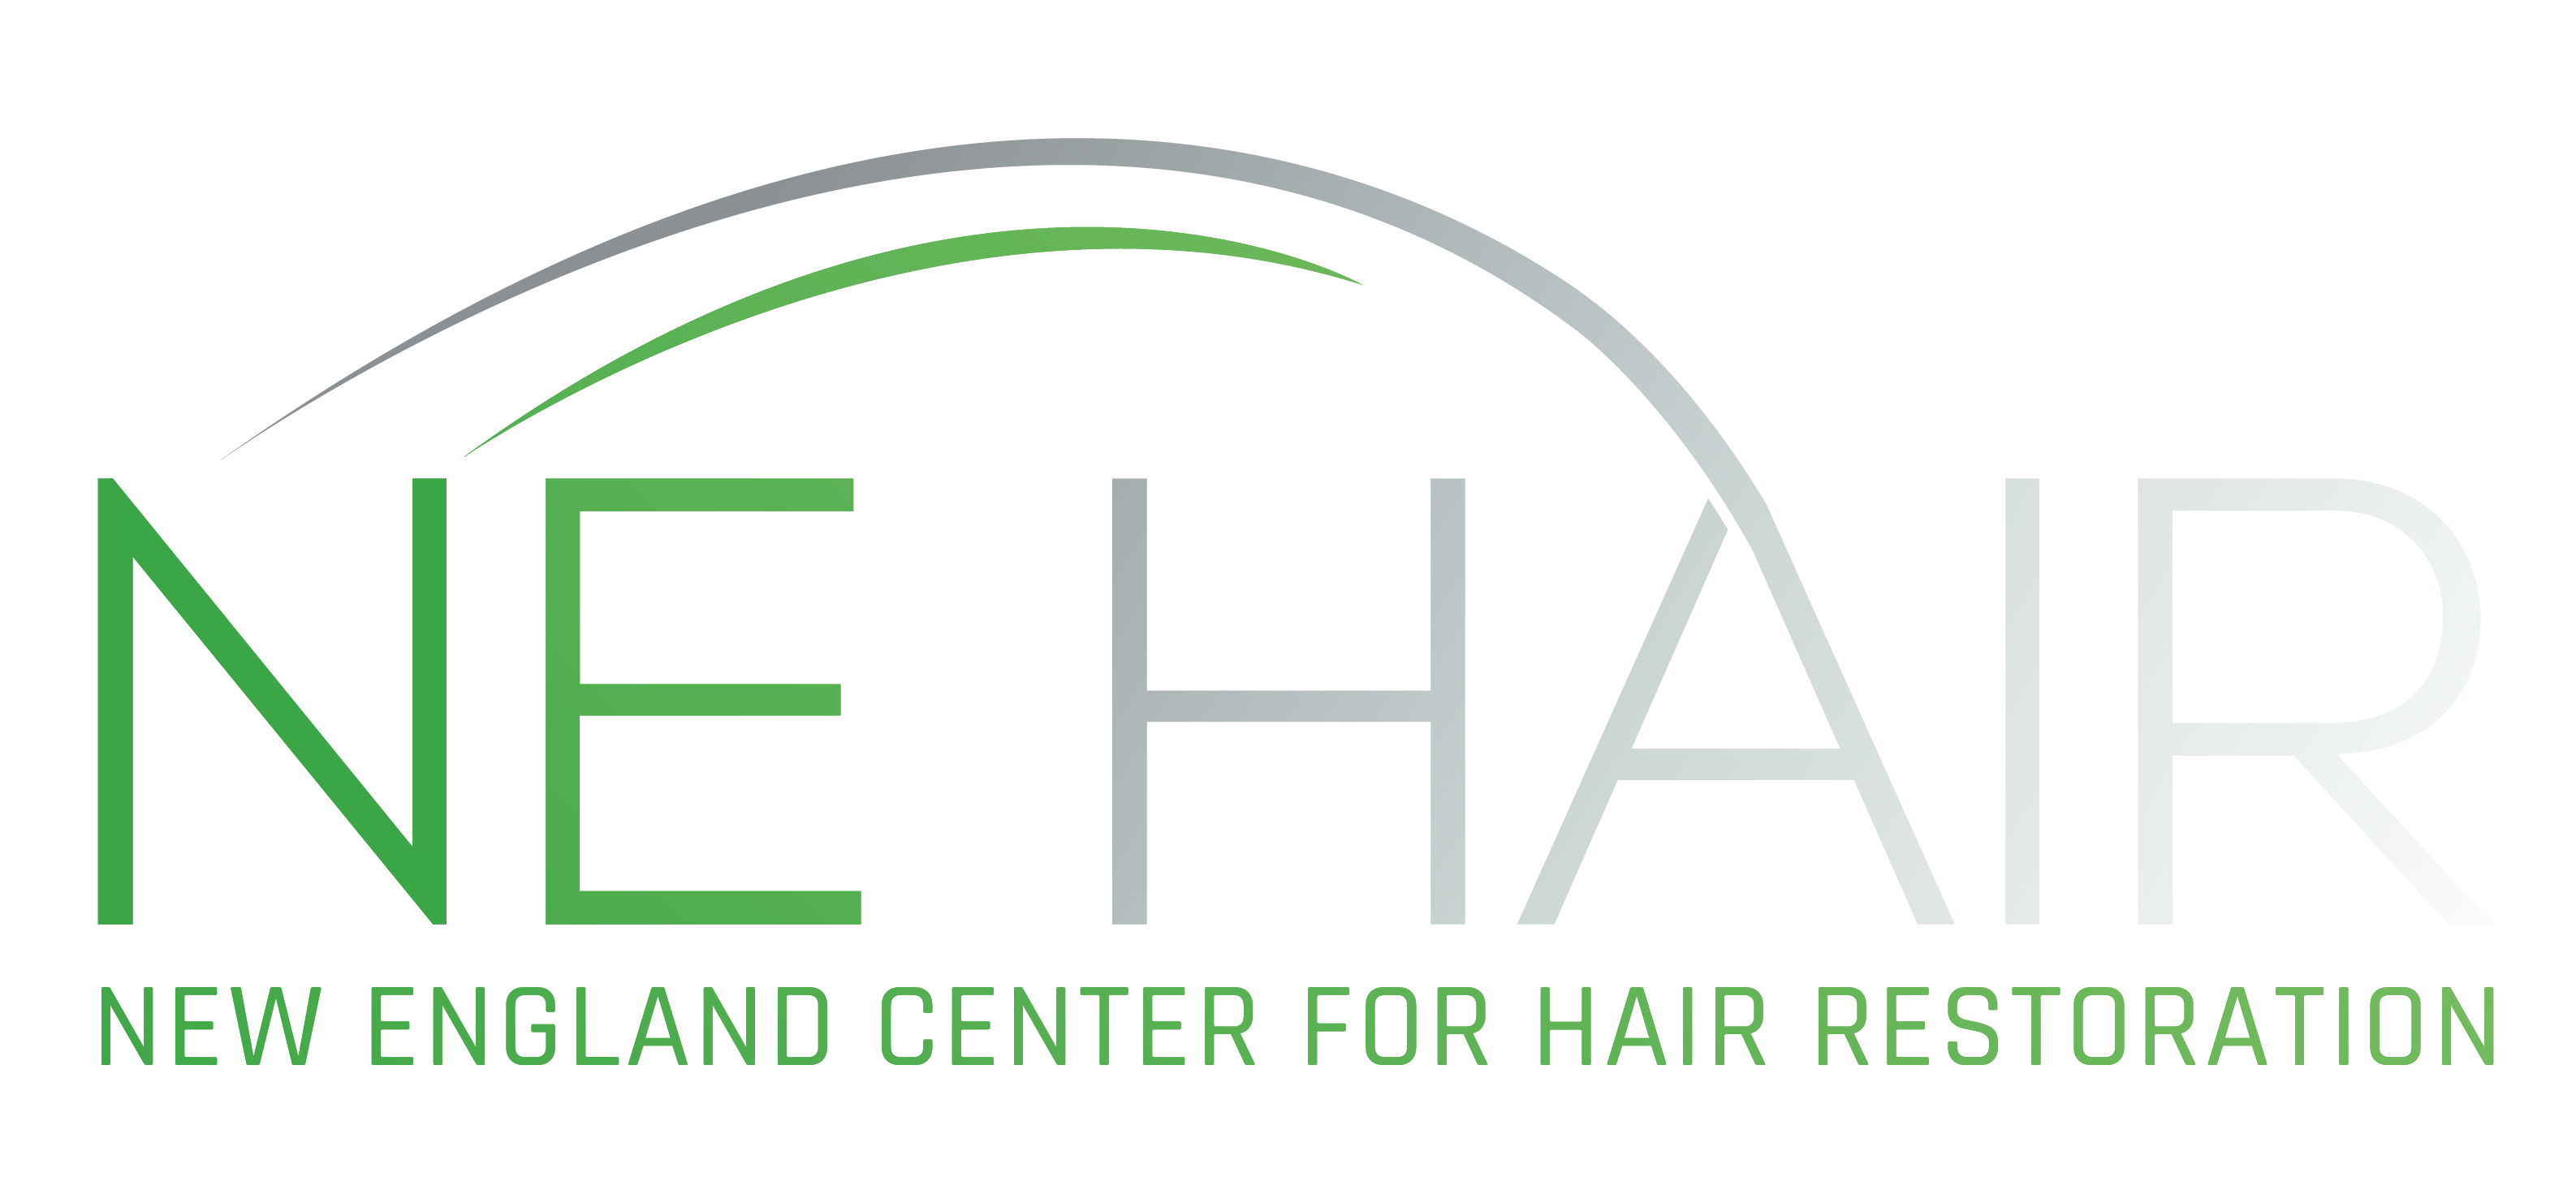 New England Center for Hair Restoration Logo